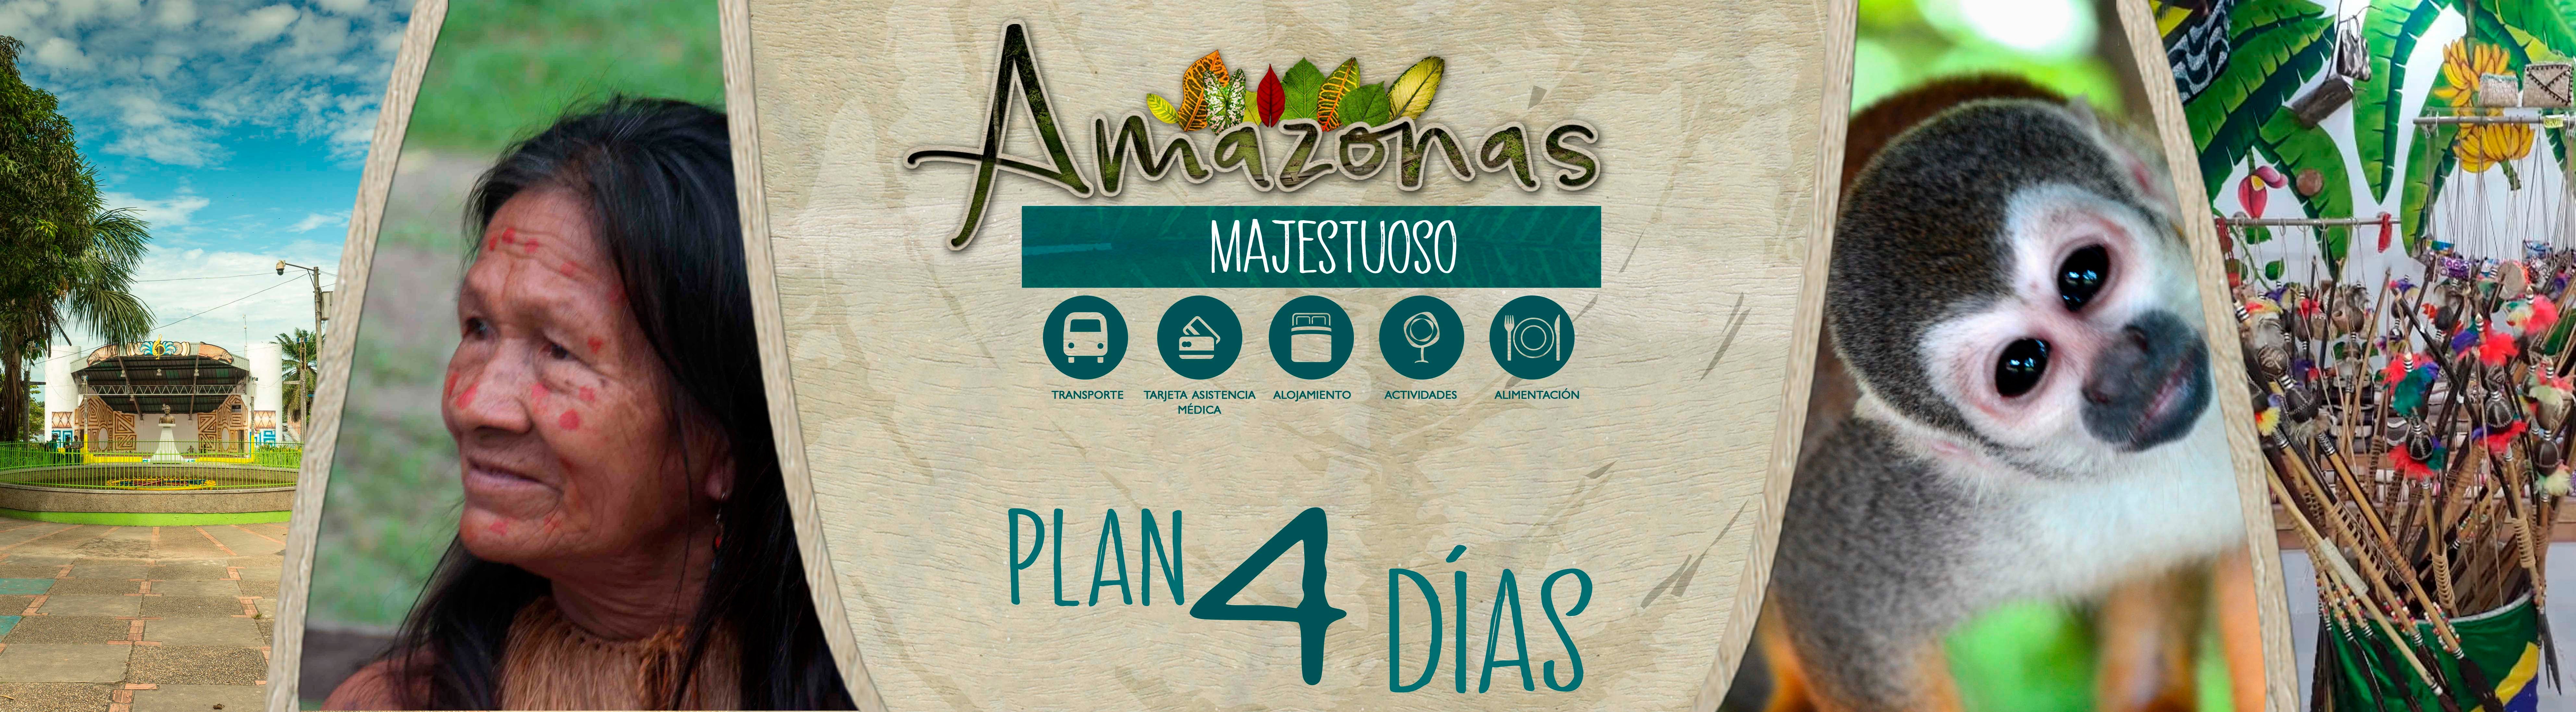 Planes-completos-Amazonas-4-DIAS